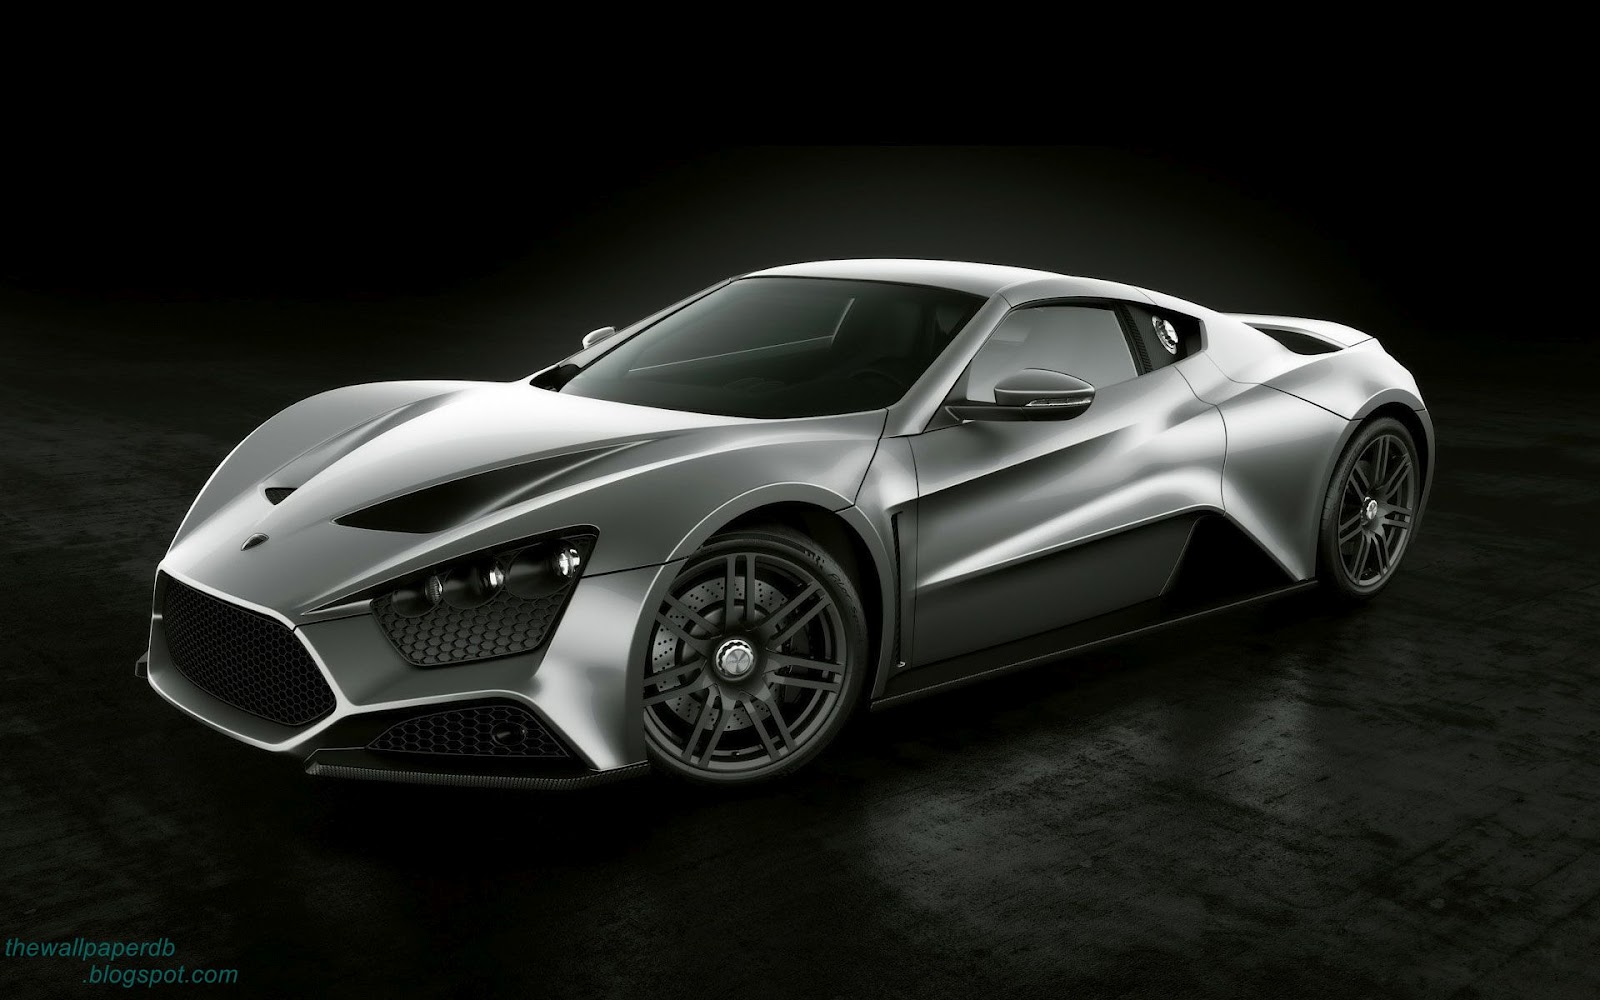 New Lamborghini Concept Car Wallpaper The Database